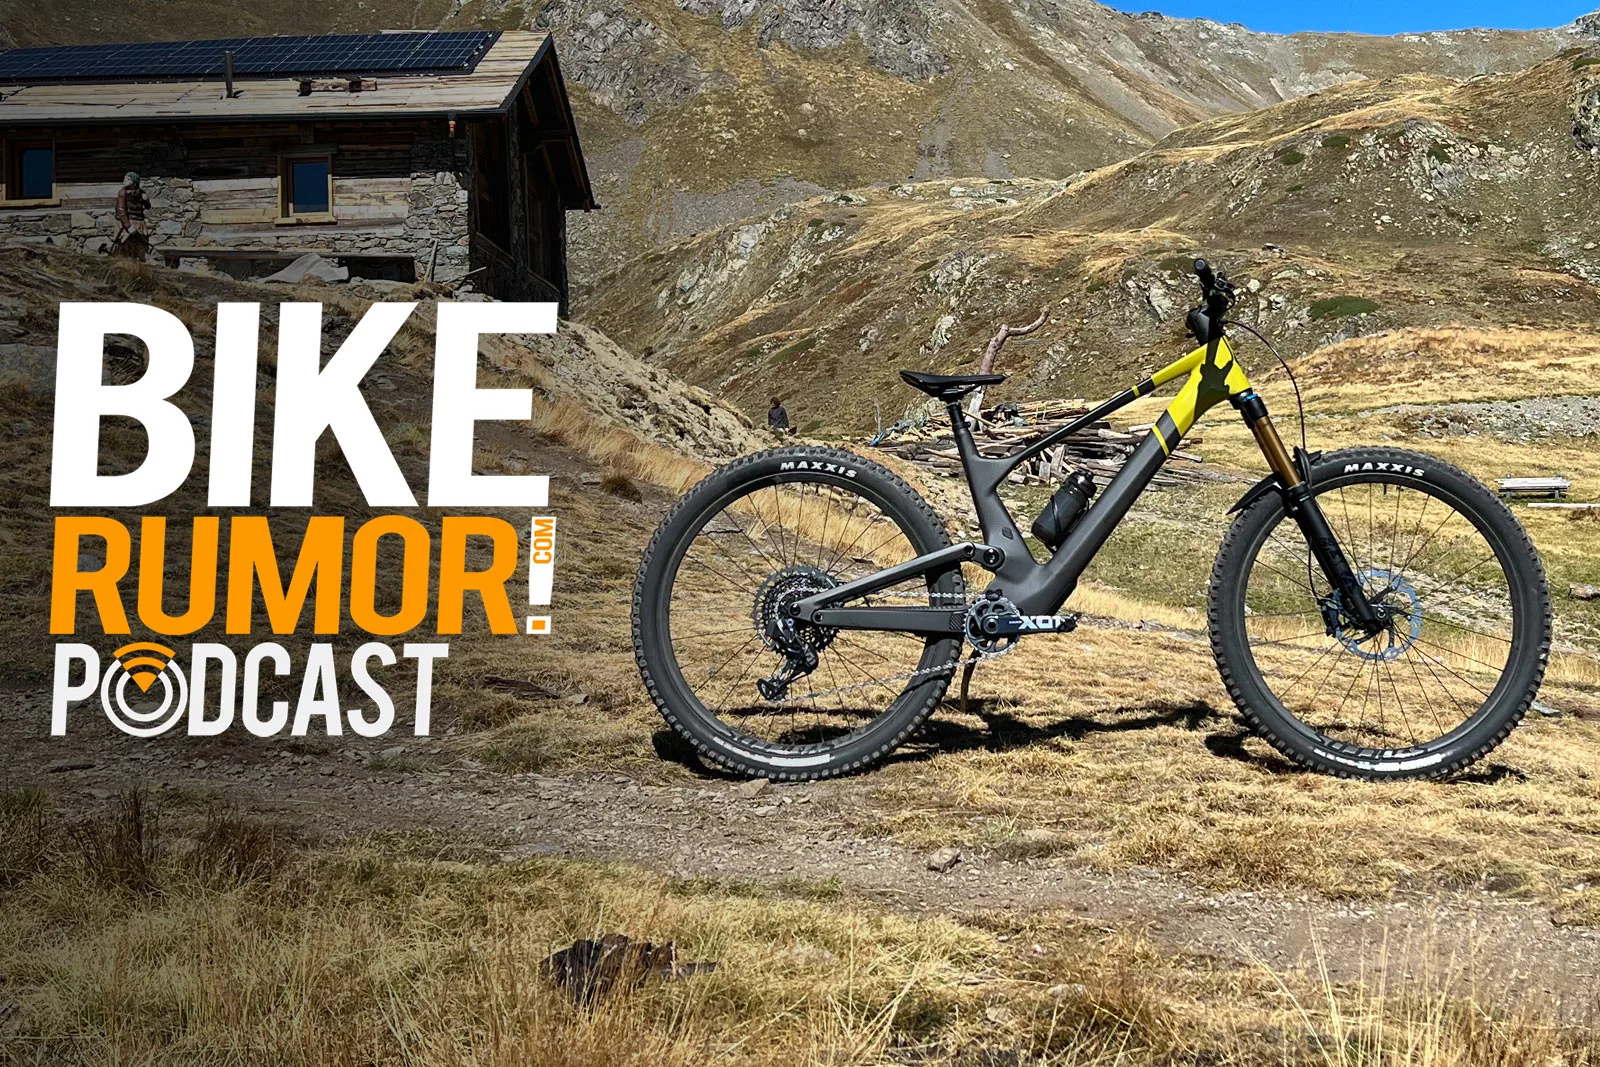 bikerumor podcast interview with scott mountain bike engineers about new genius trail bike